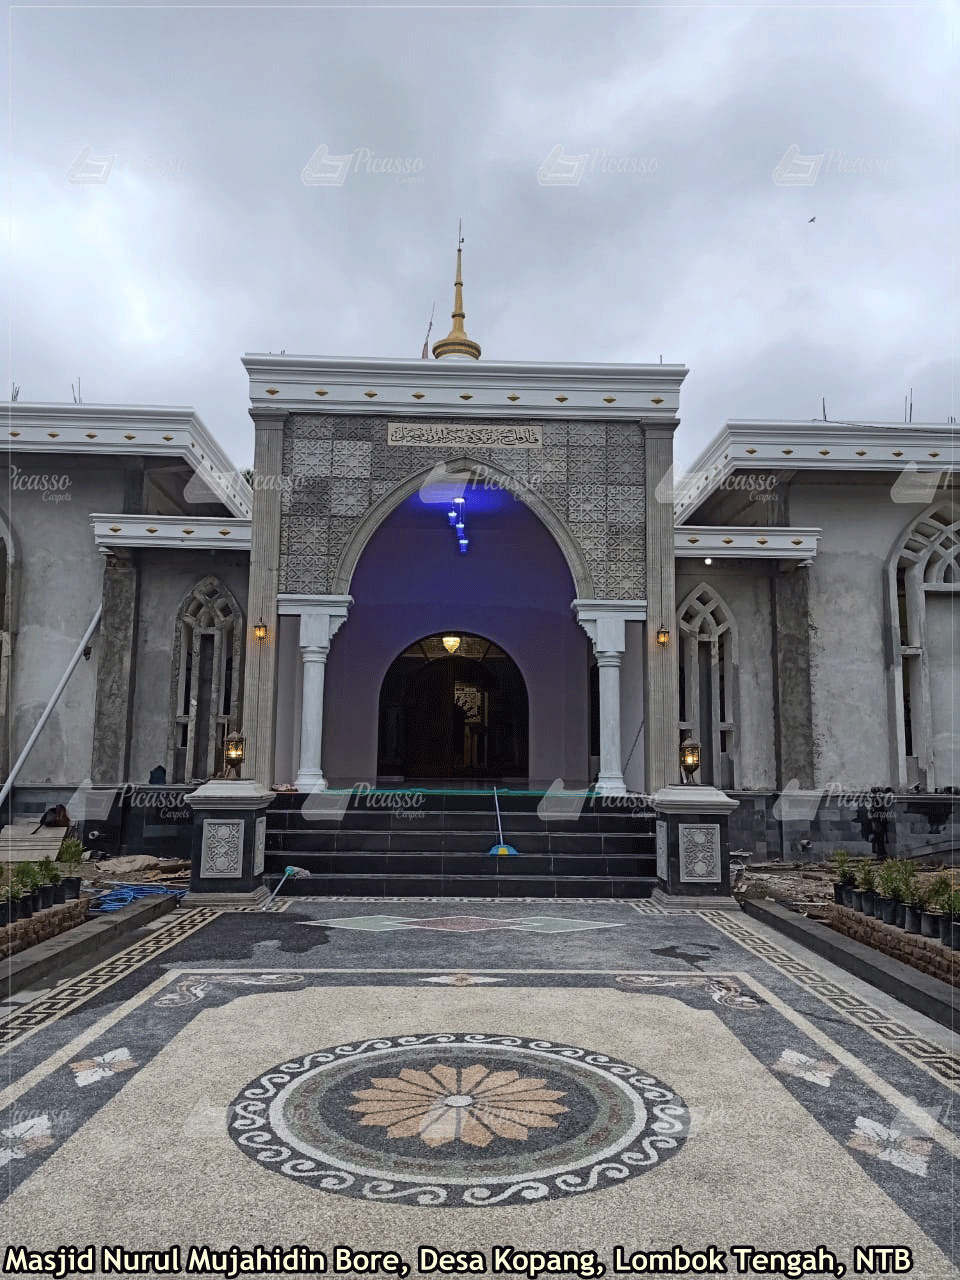 Karpet-Masjid-Nurul-Mujahidin-Bore-Rembiga-Lombok-Tengah-NTB